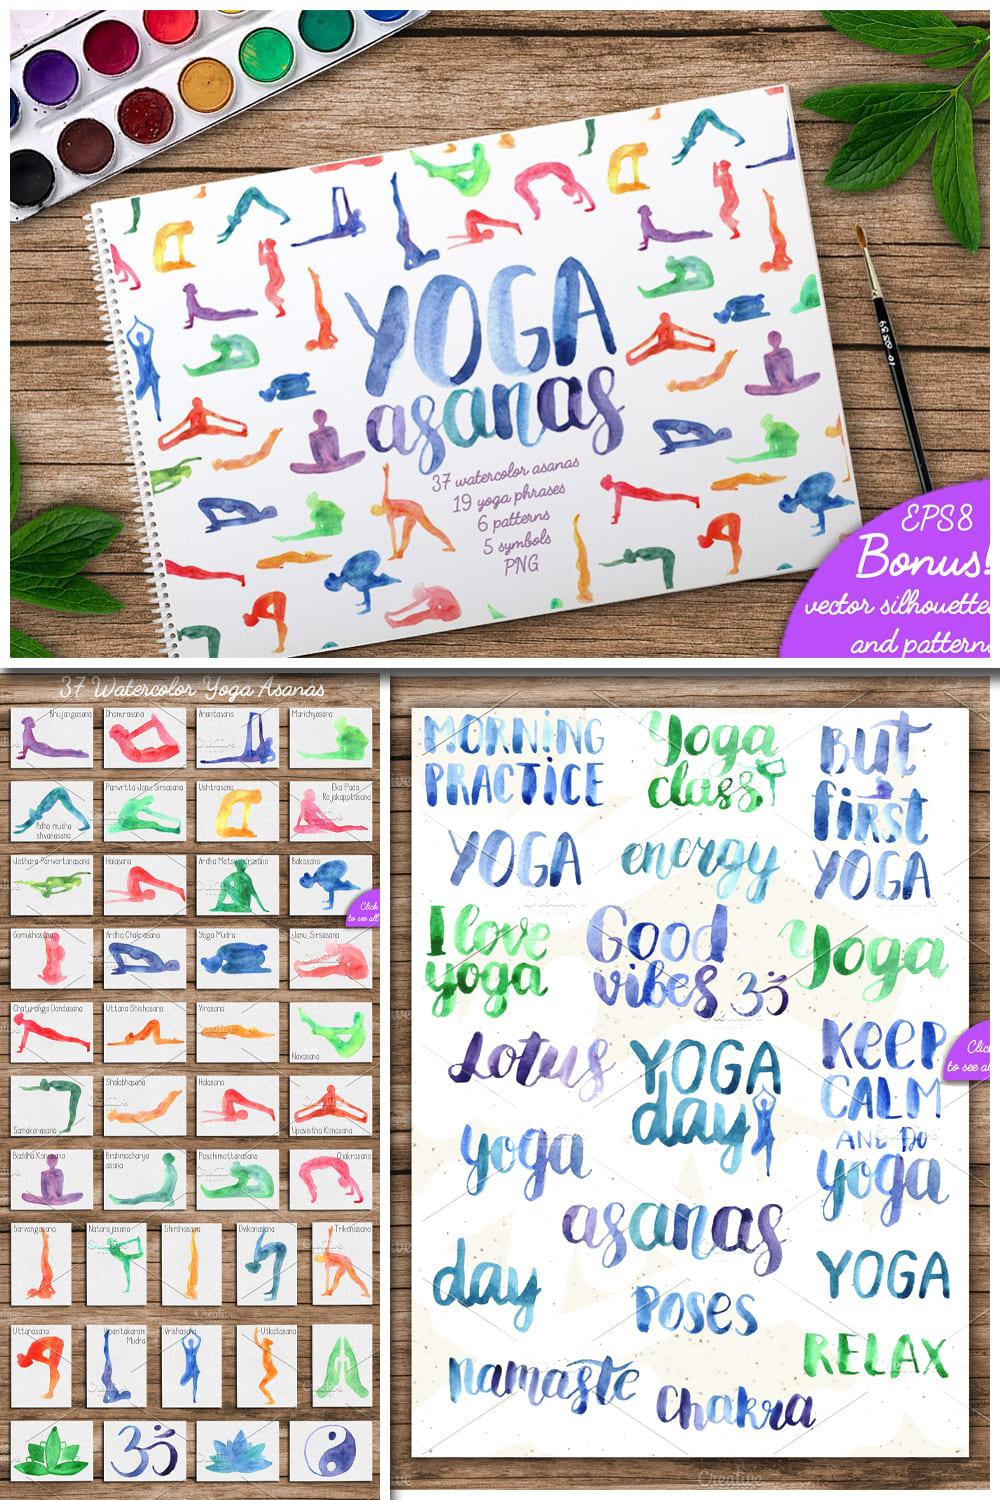 Watercolor yoga asanas - pinterest image preview.